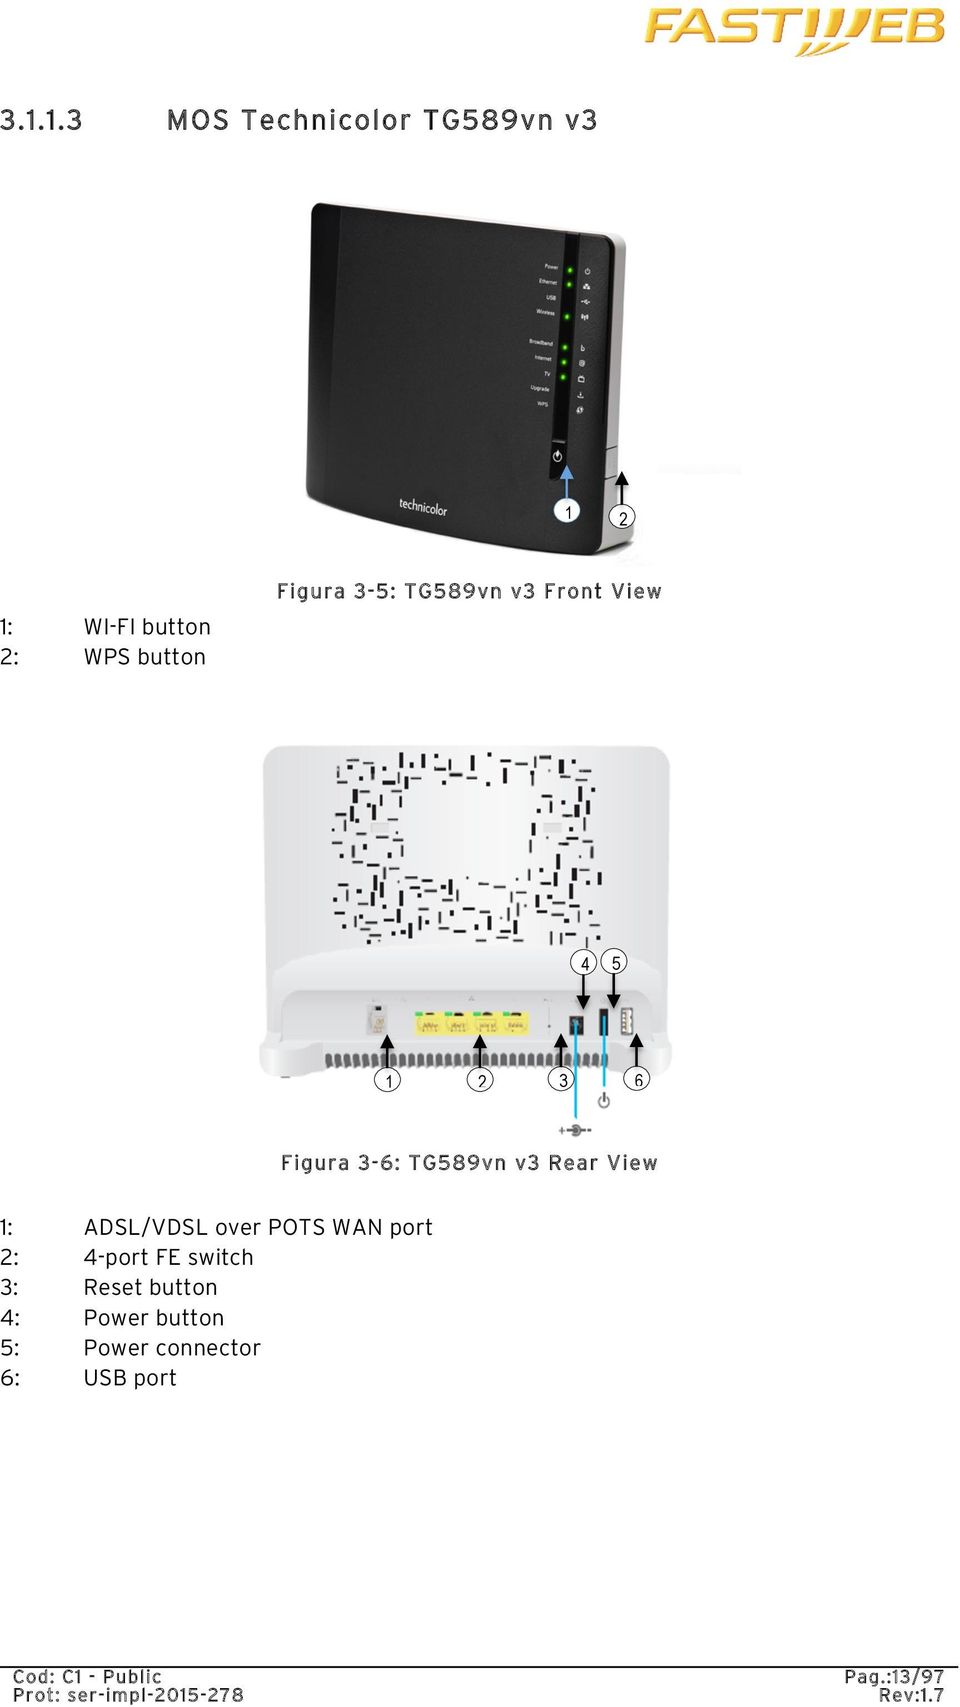 Rear View 1: ADSL/VDSL over POTS WAN port 2: 4-port FE switch 3: